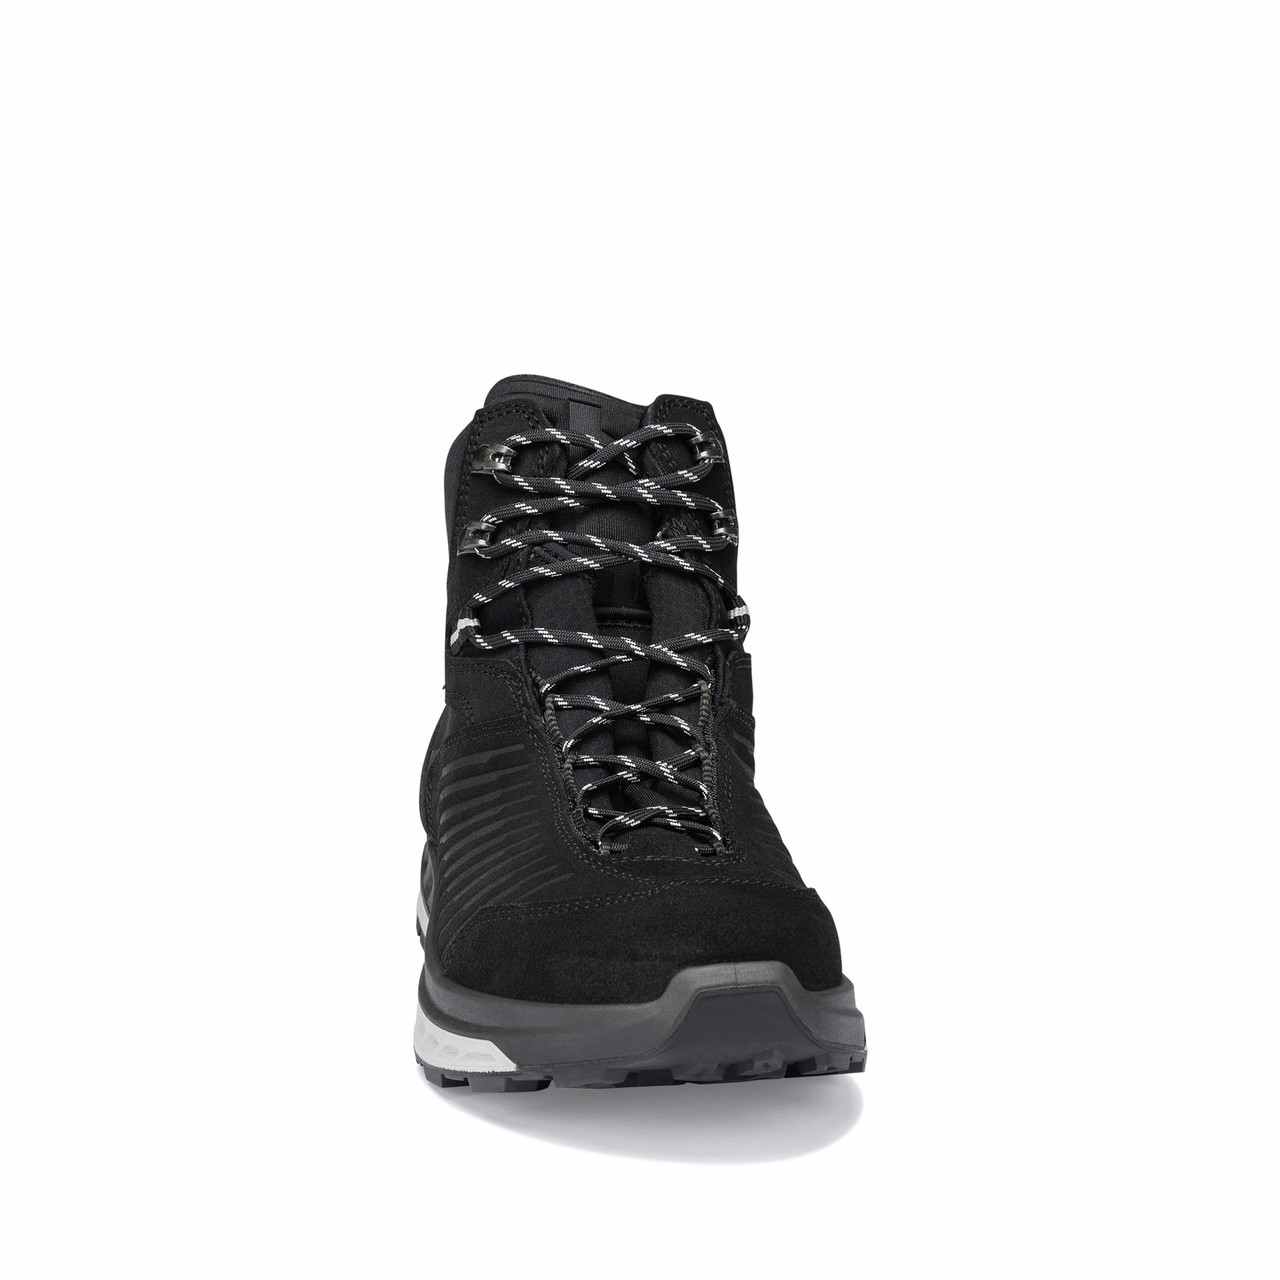 Blueridge ES Hiking Boots Black/Light Grey